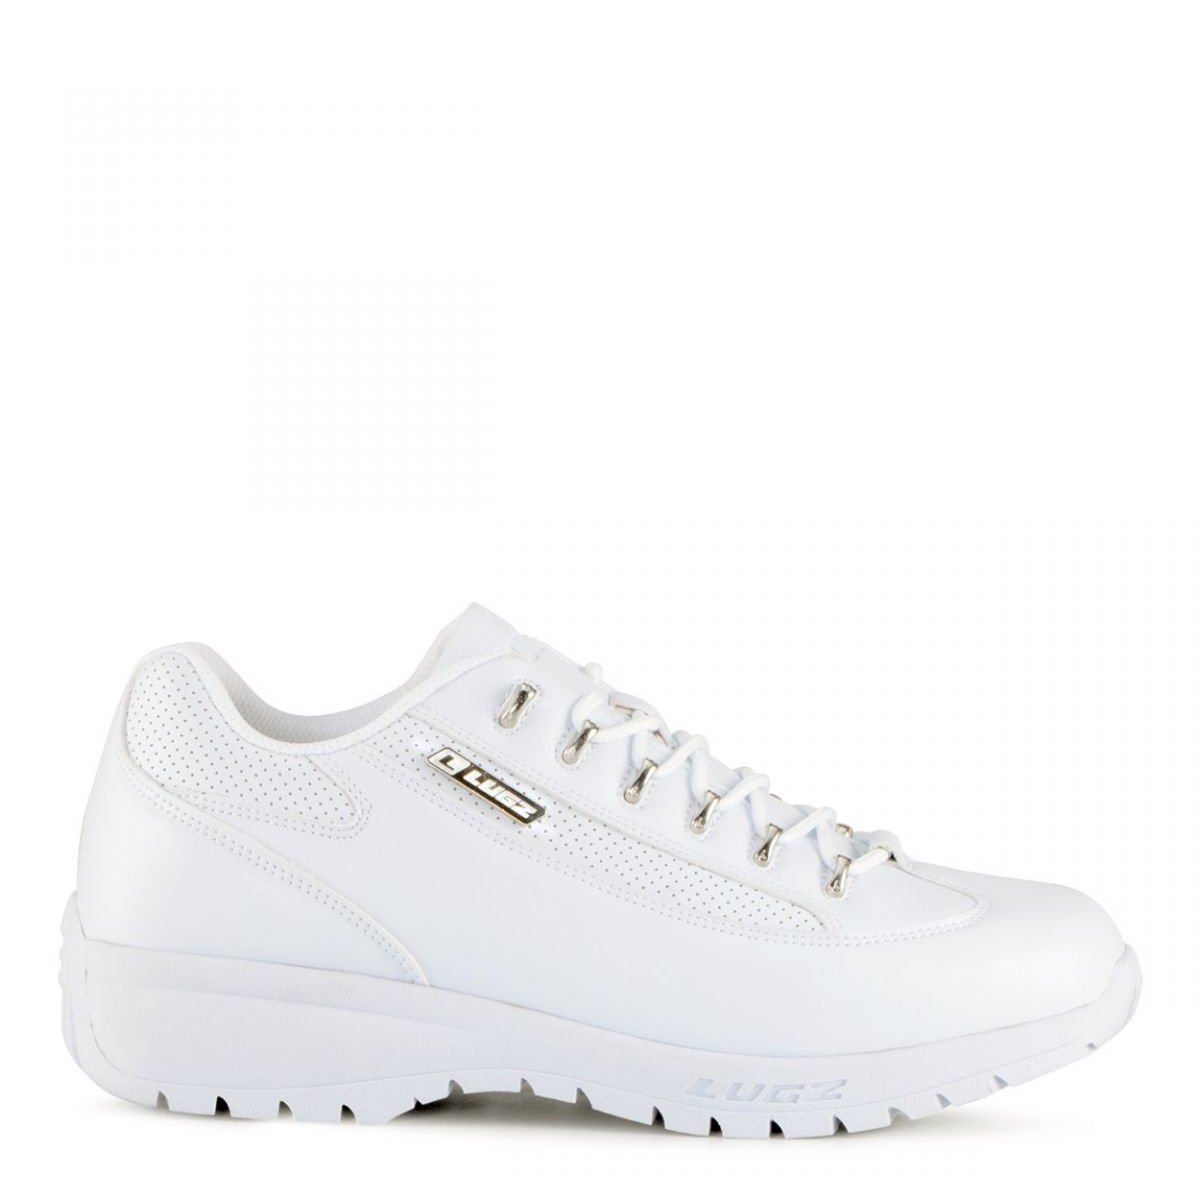 Lugz Men's Express Sneaker White - MEXPRSPV-100 WHITE - WHITE, 8.5